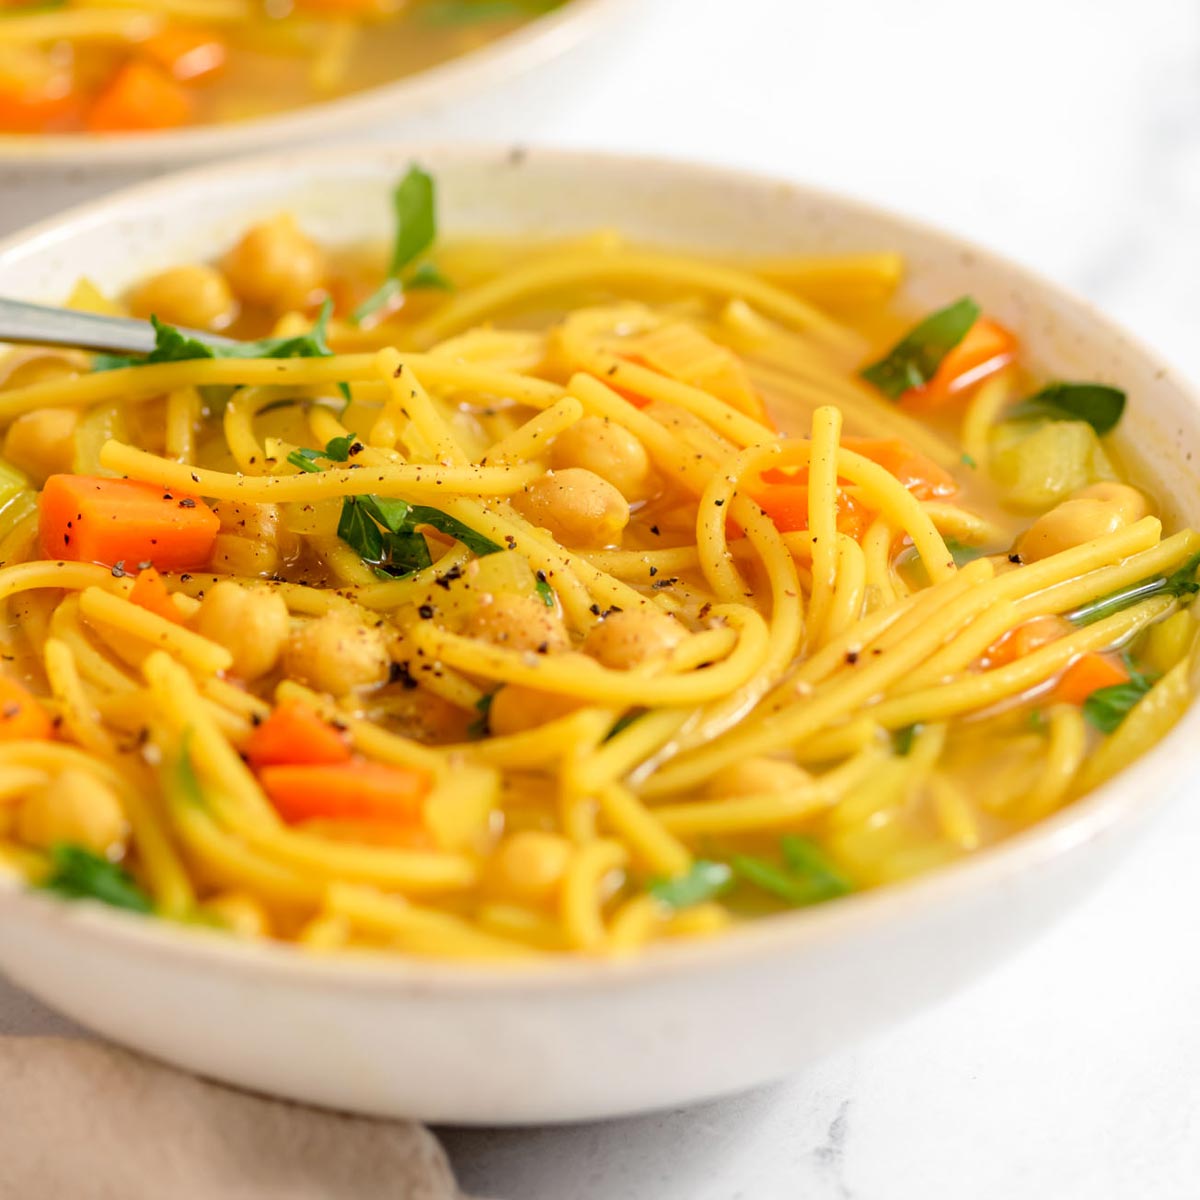 https://runningonrealfood.com/wp-content/uploads/2022/01/Healthy-Vegan-Chickpea-Noodle-Soup-Recipe-Feature.jpg